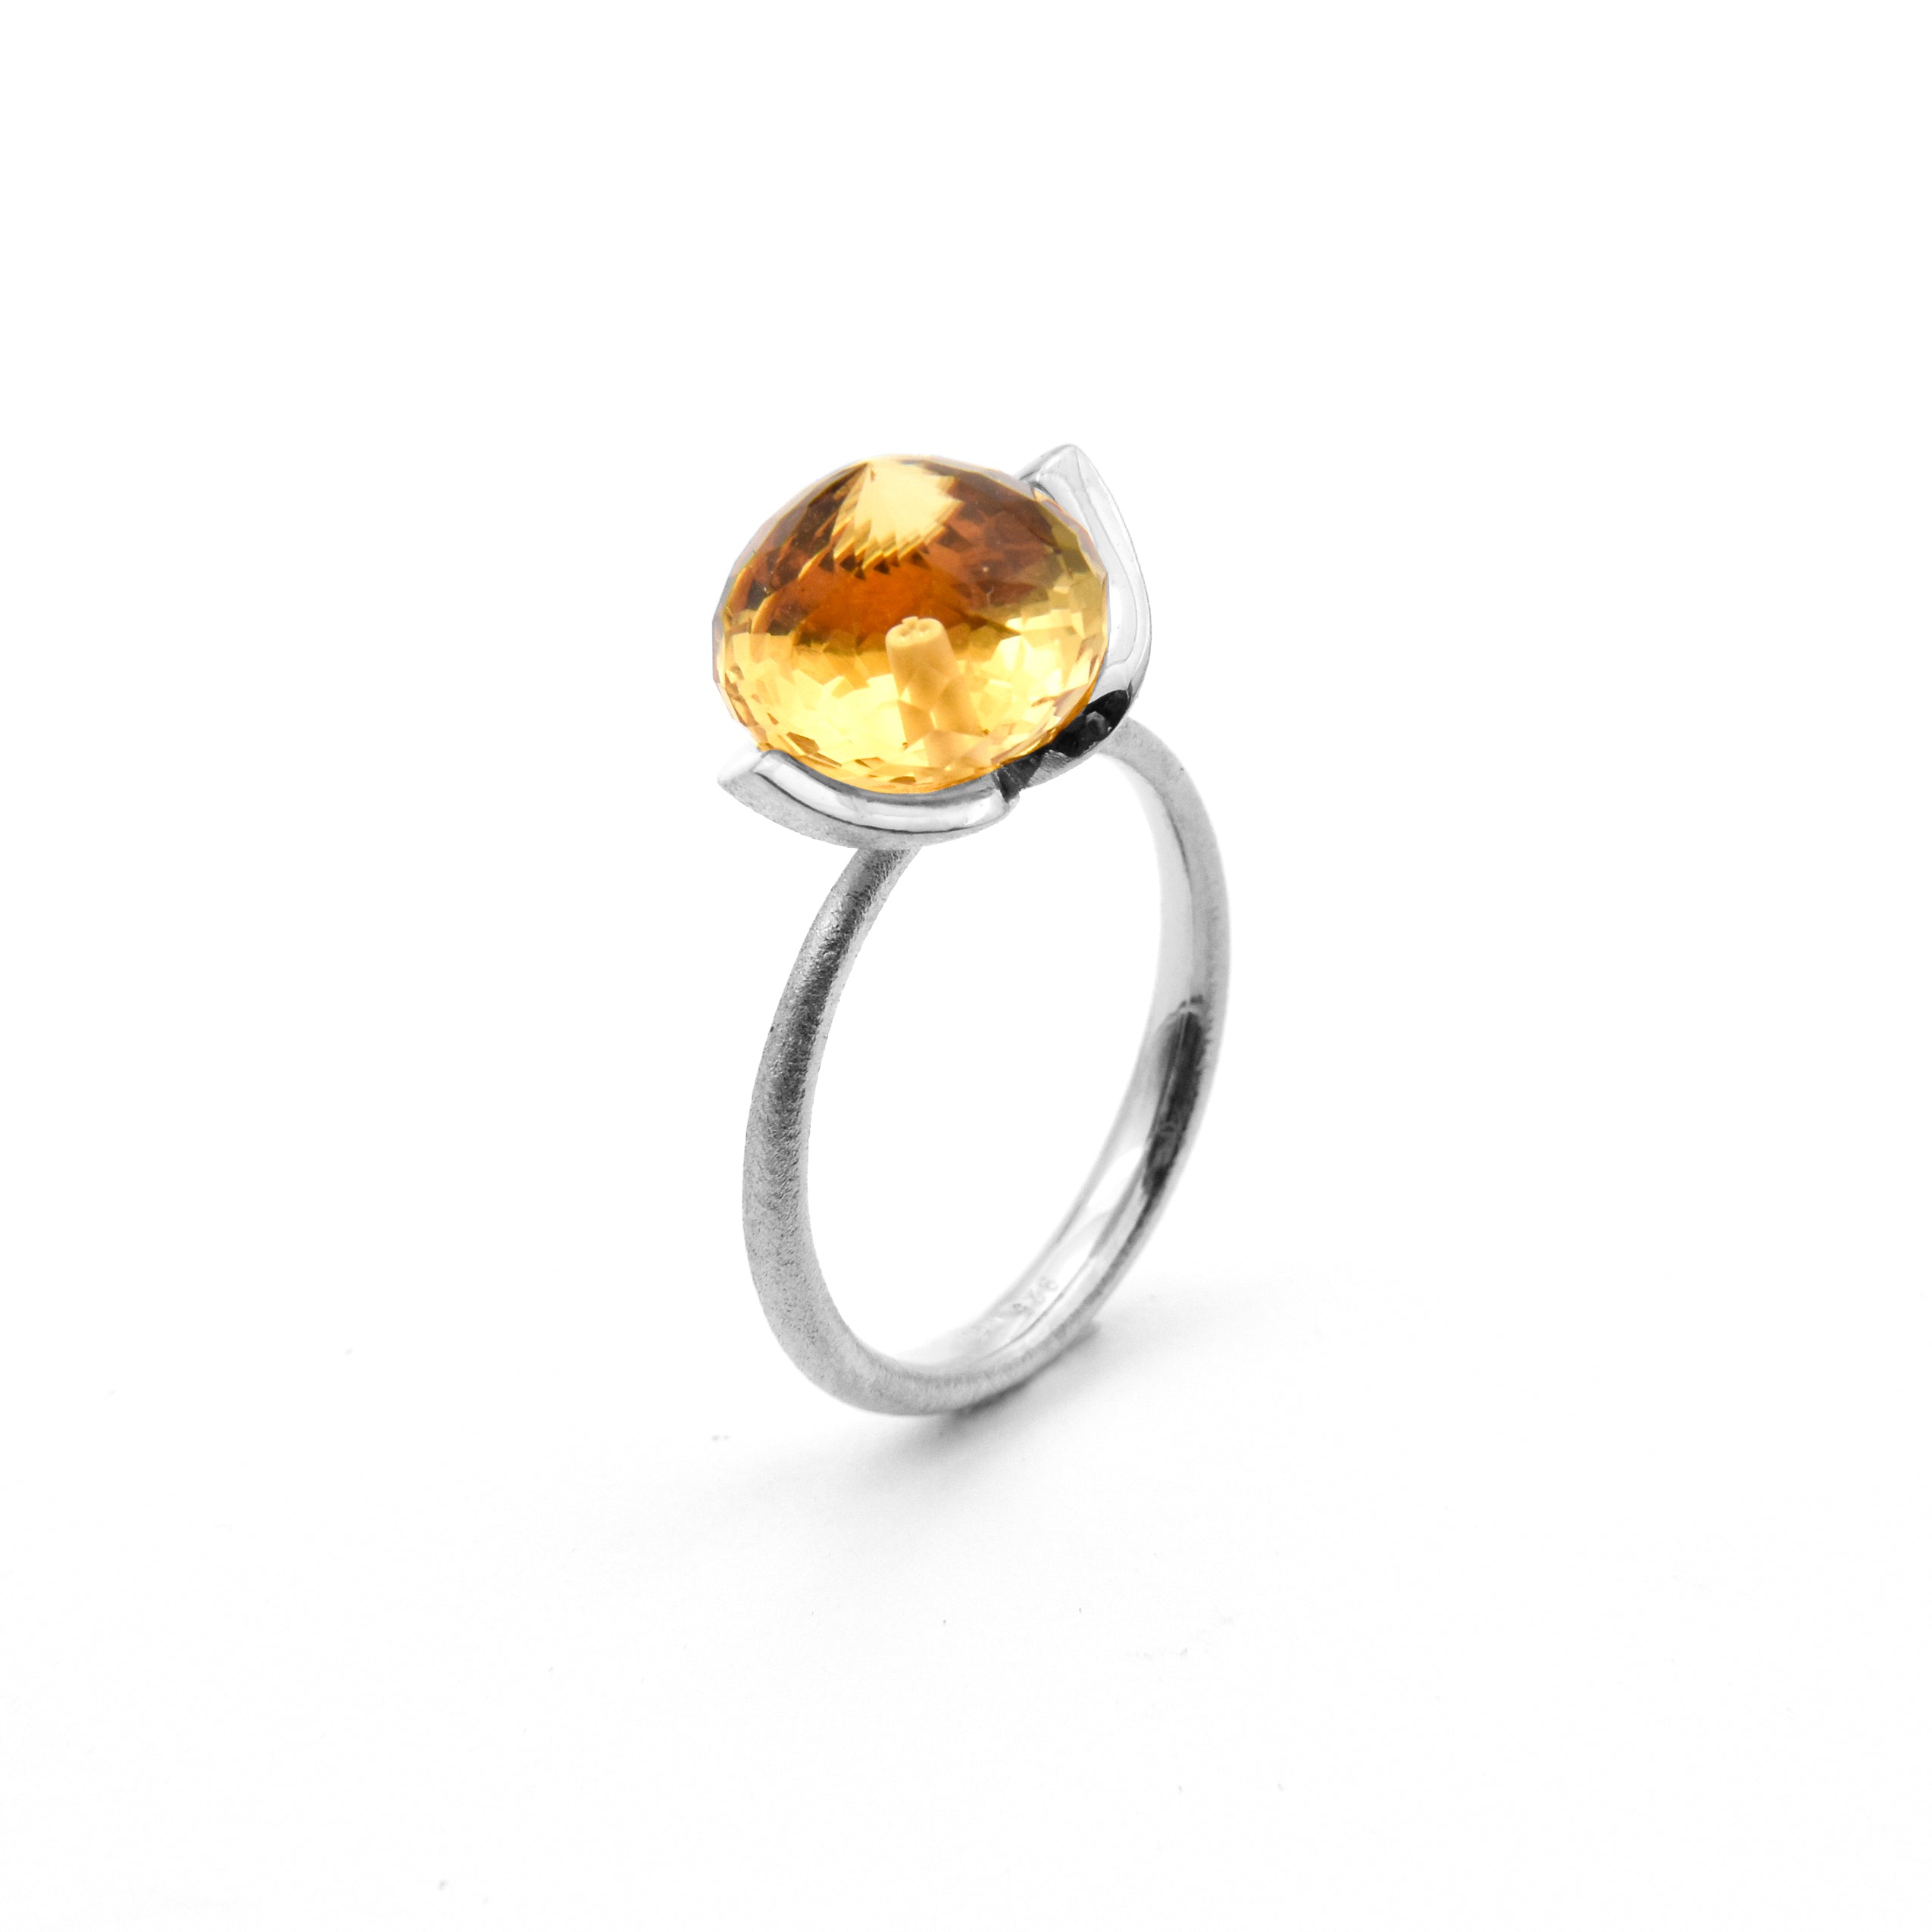 Dolce ring "medium" with champagne quartz 925/-